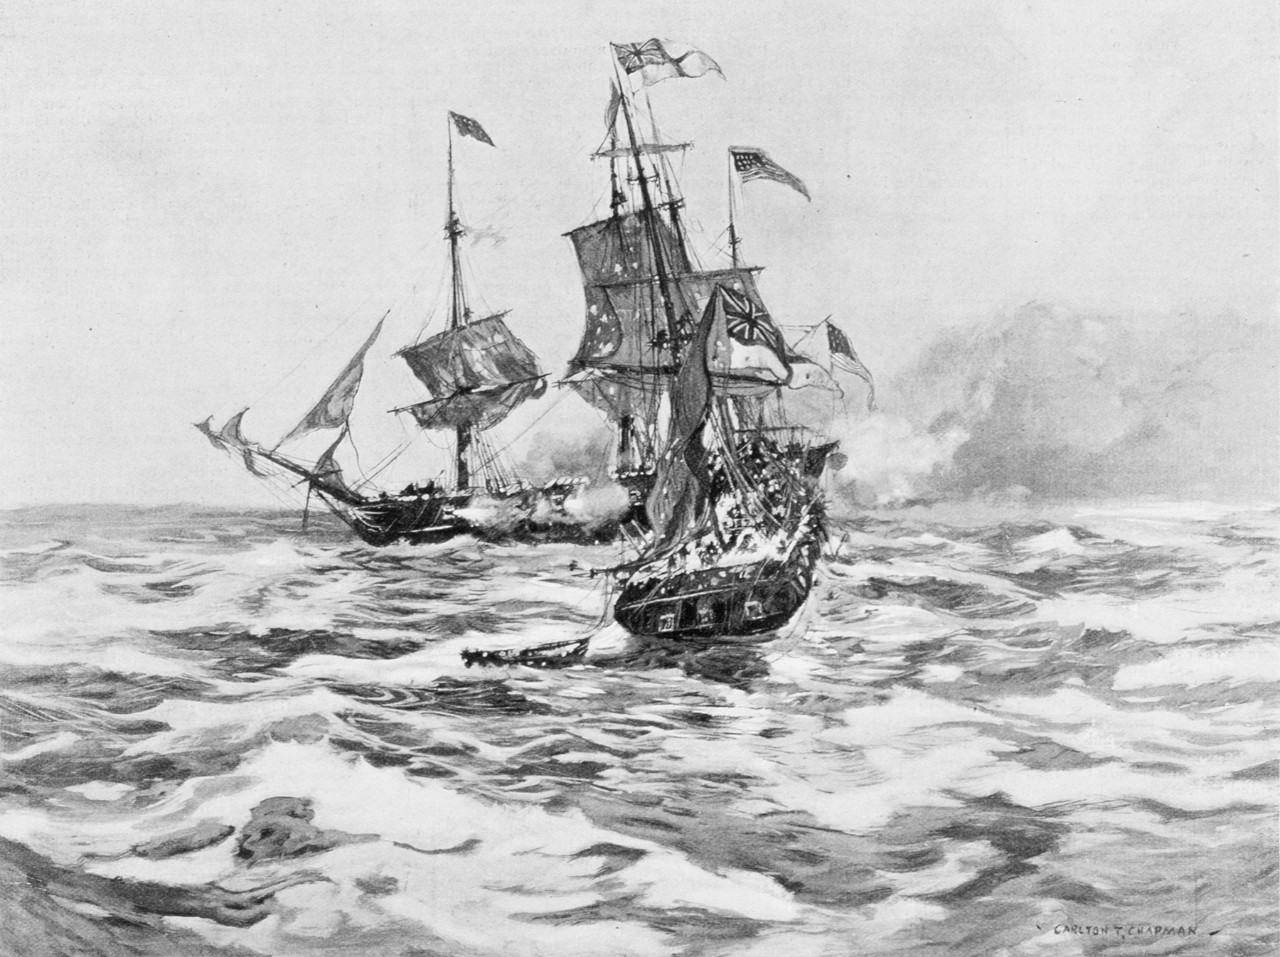 print depicting 2 ships doing battle at sea. 